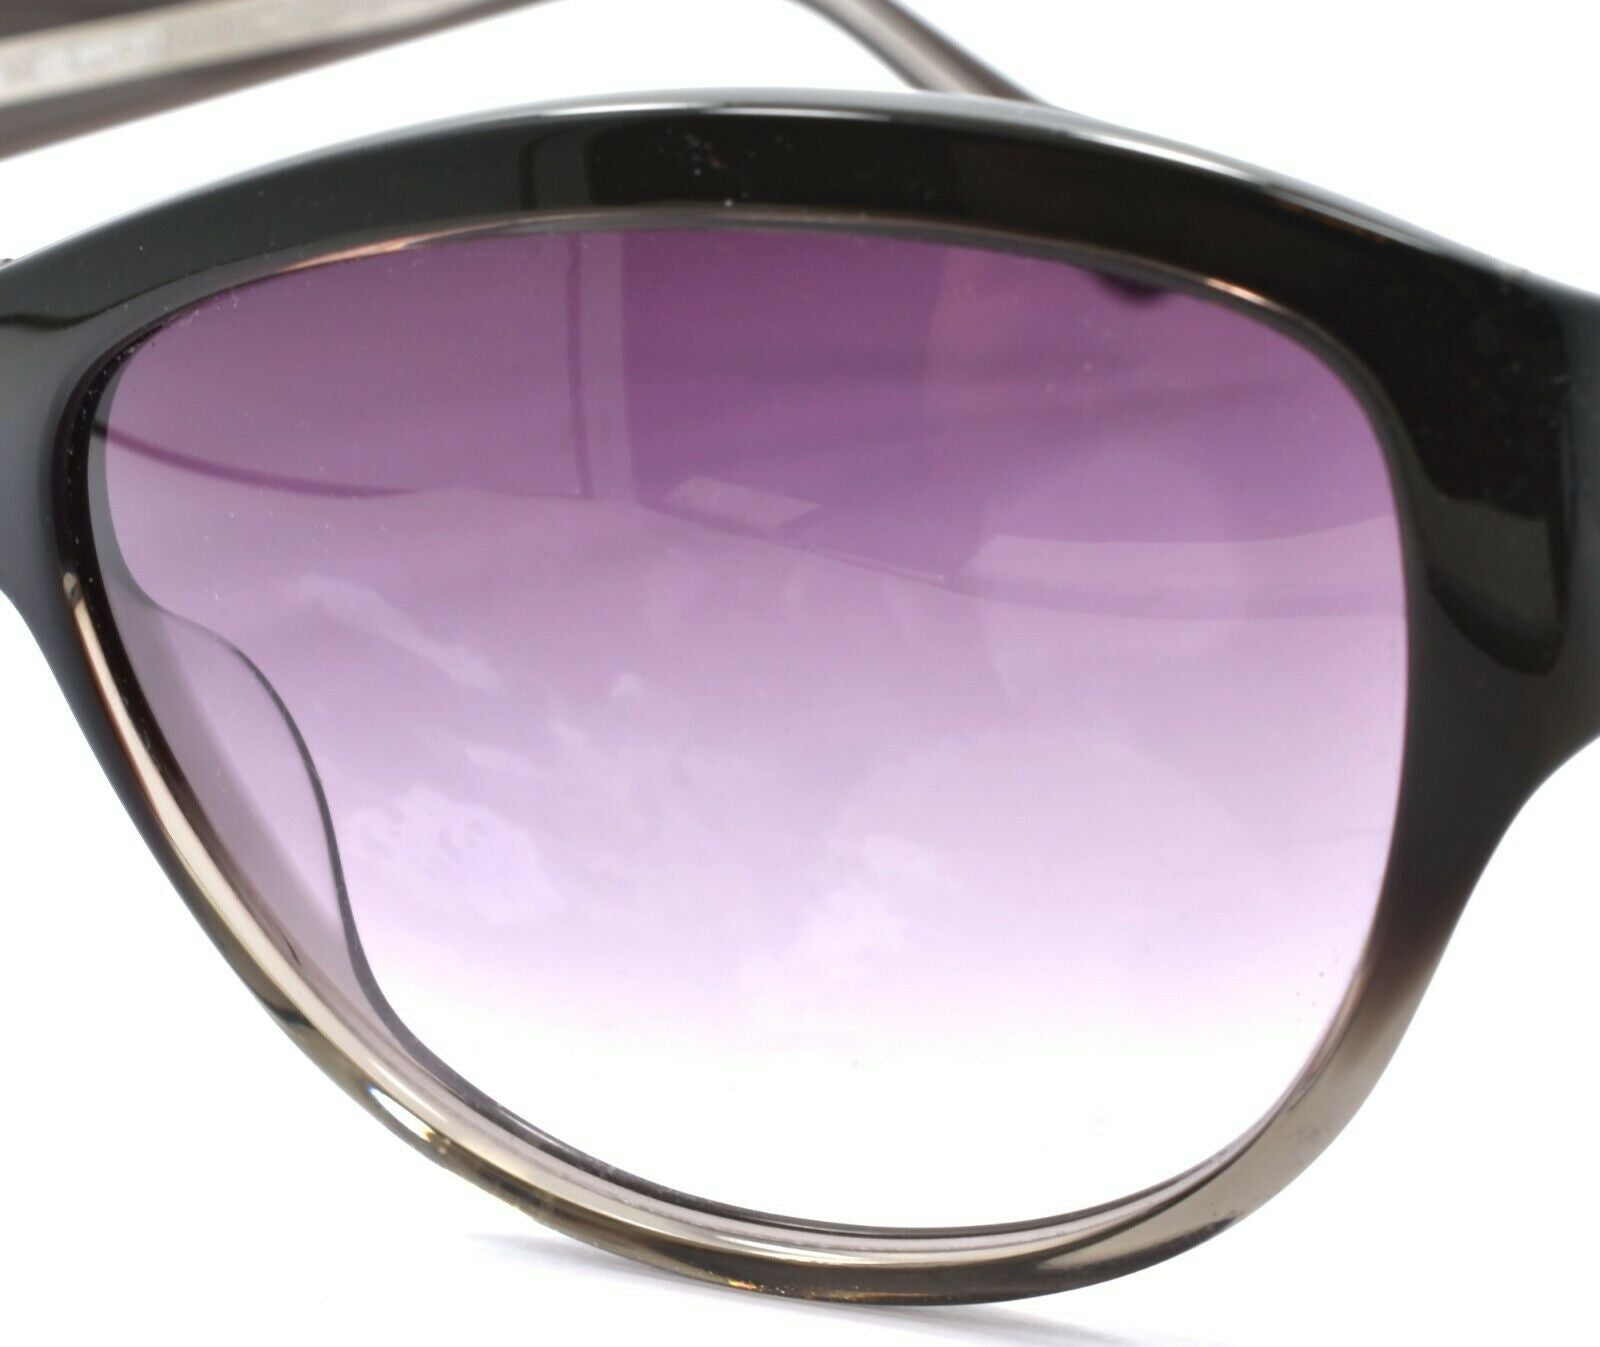 5-Oliver Peoples Cavanna OBSGR Women's Sunglasses Gray / Purple Gradient JAPAN-Does not apply-IKSpecs